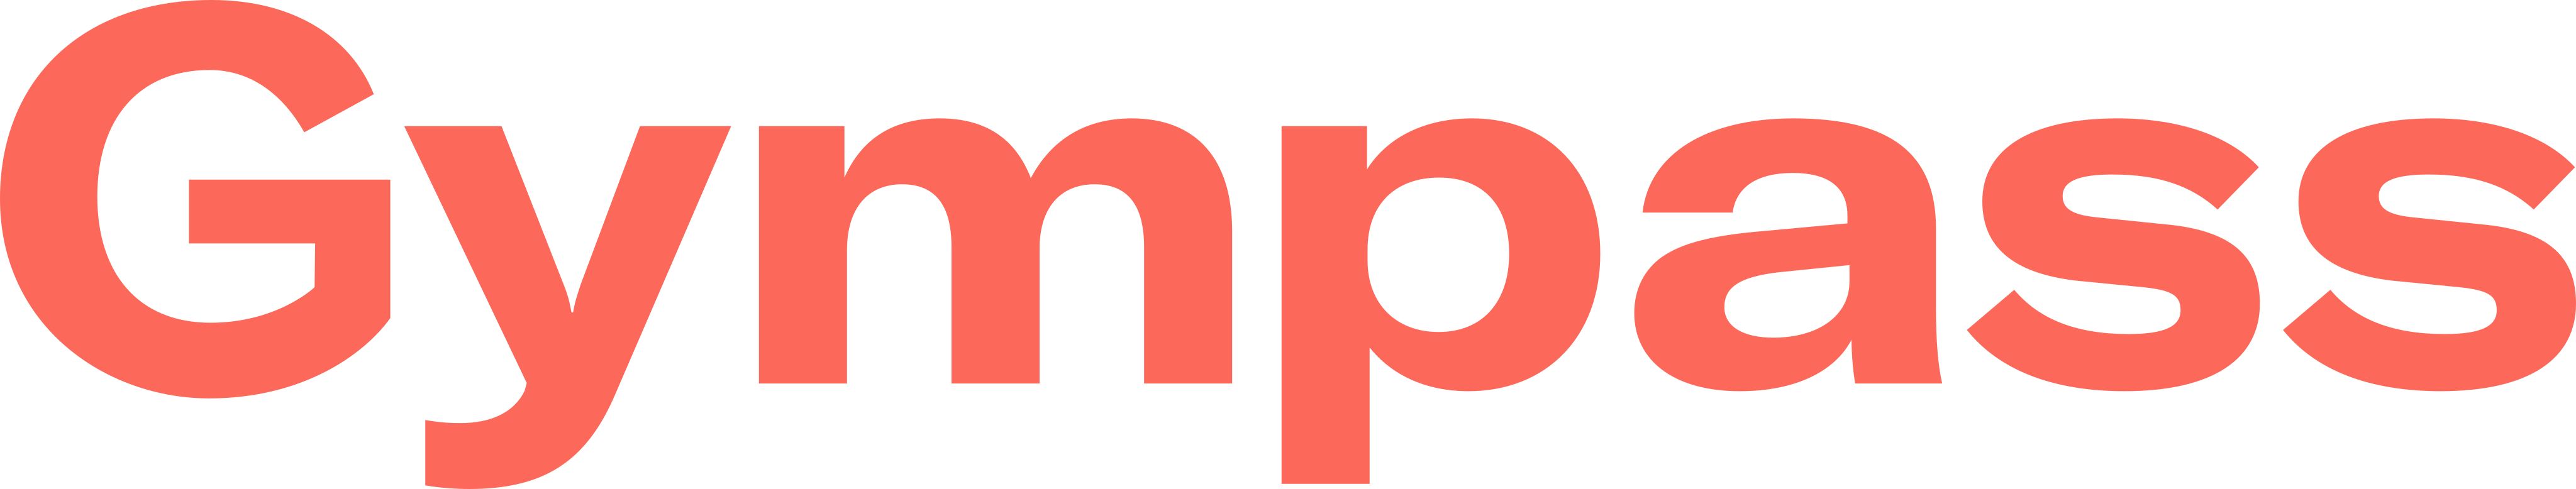 gympass logo - Gympass Logo